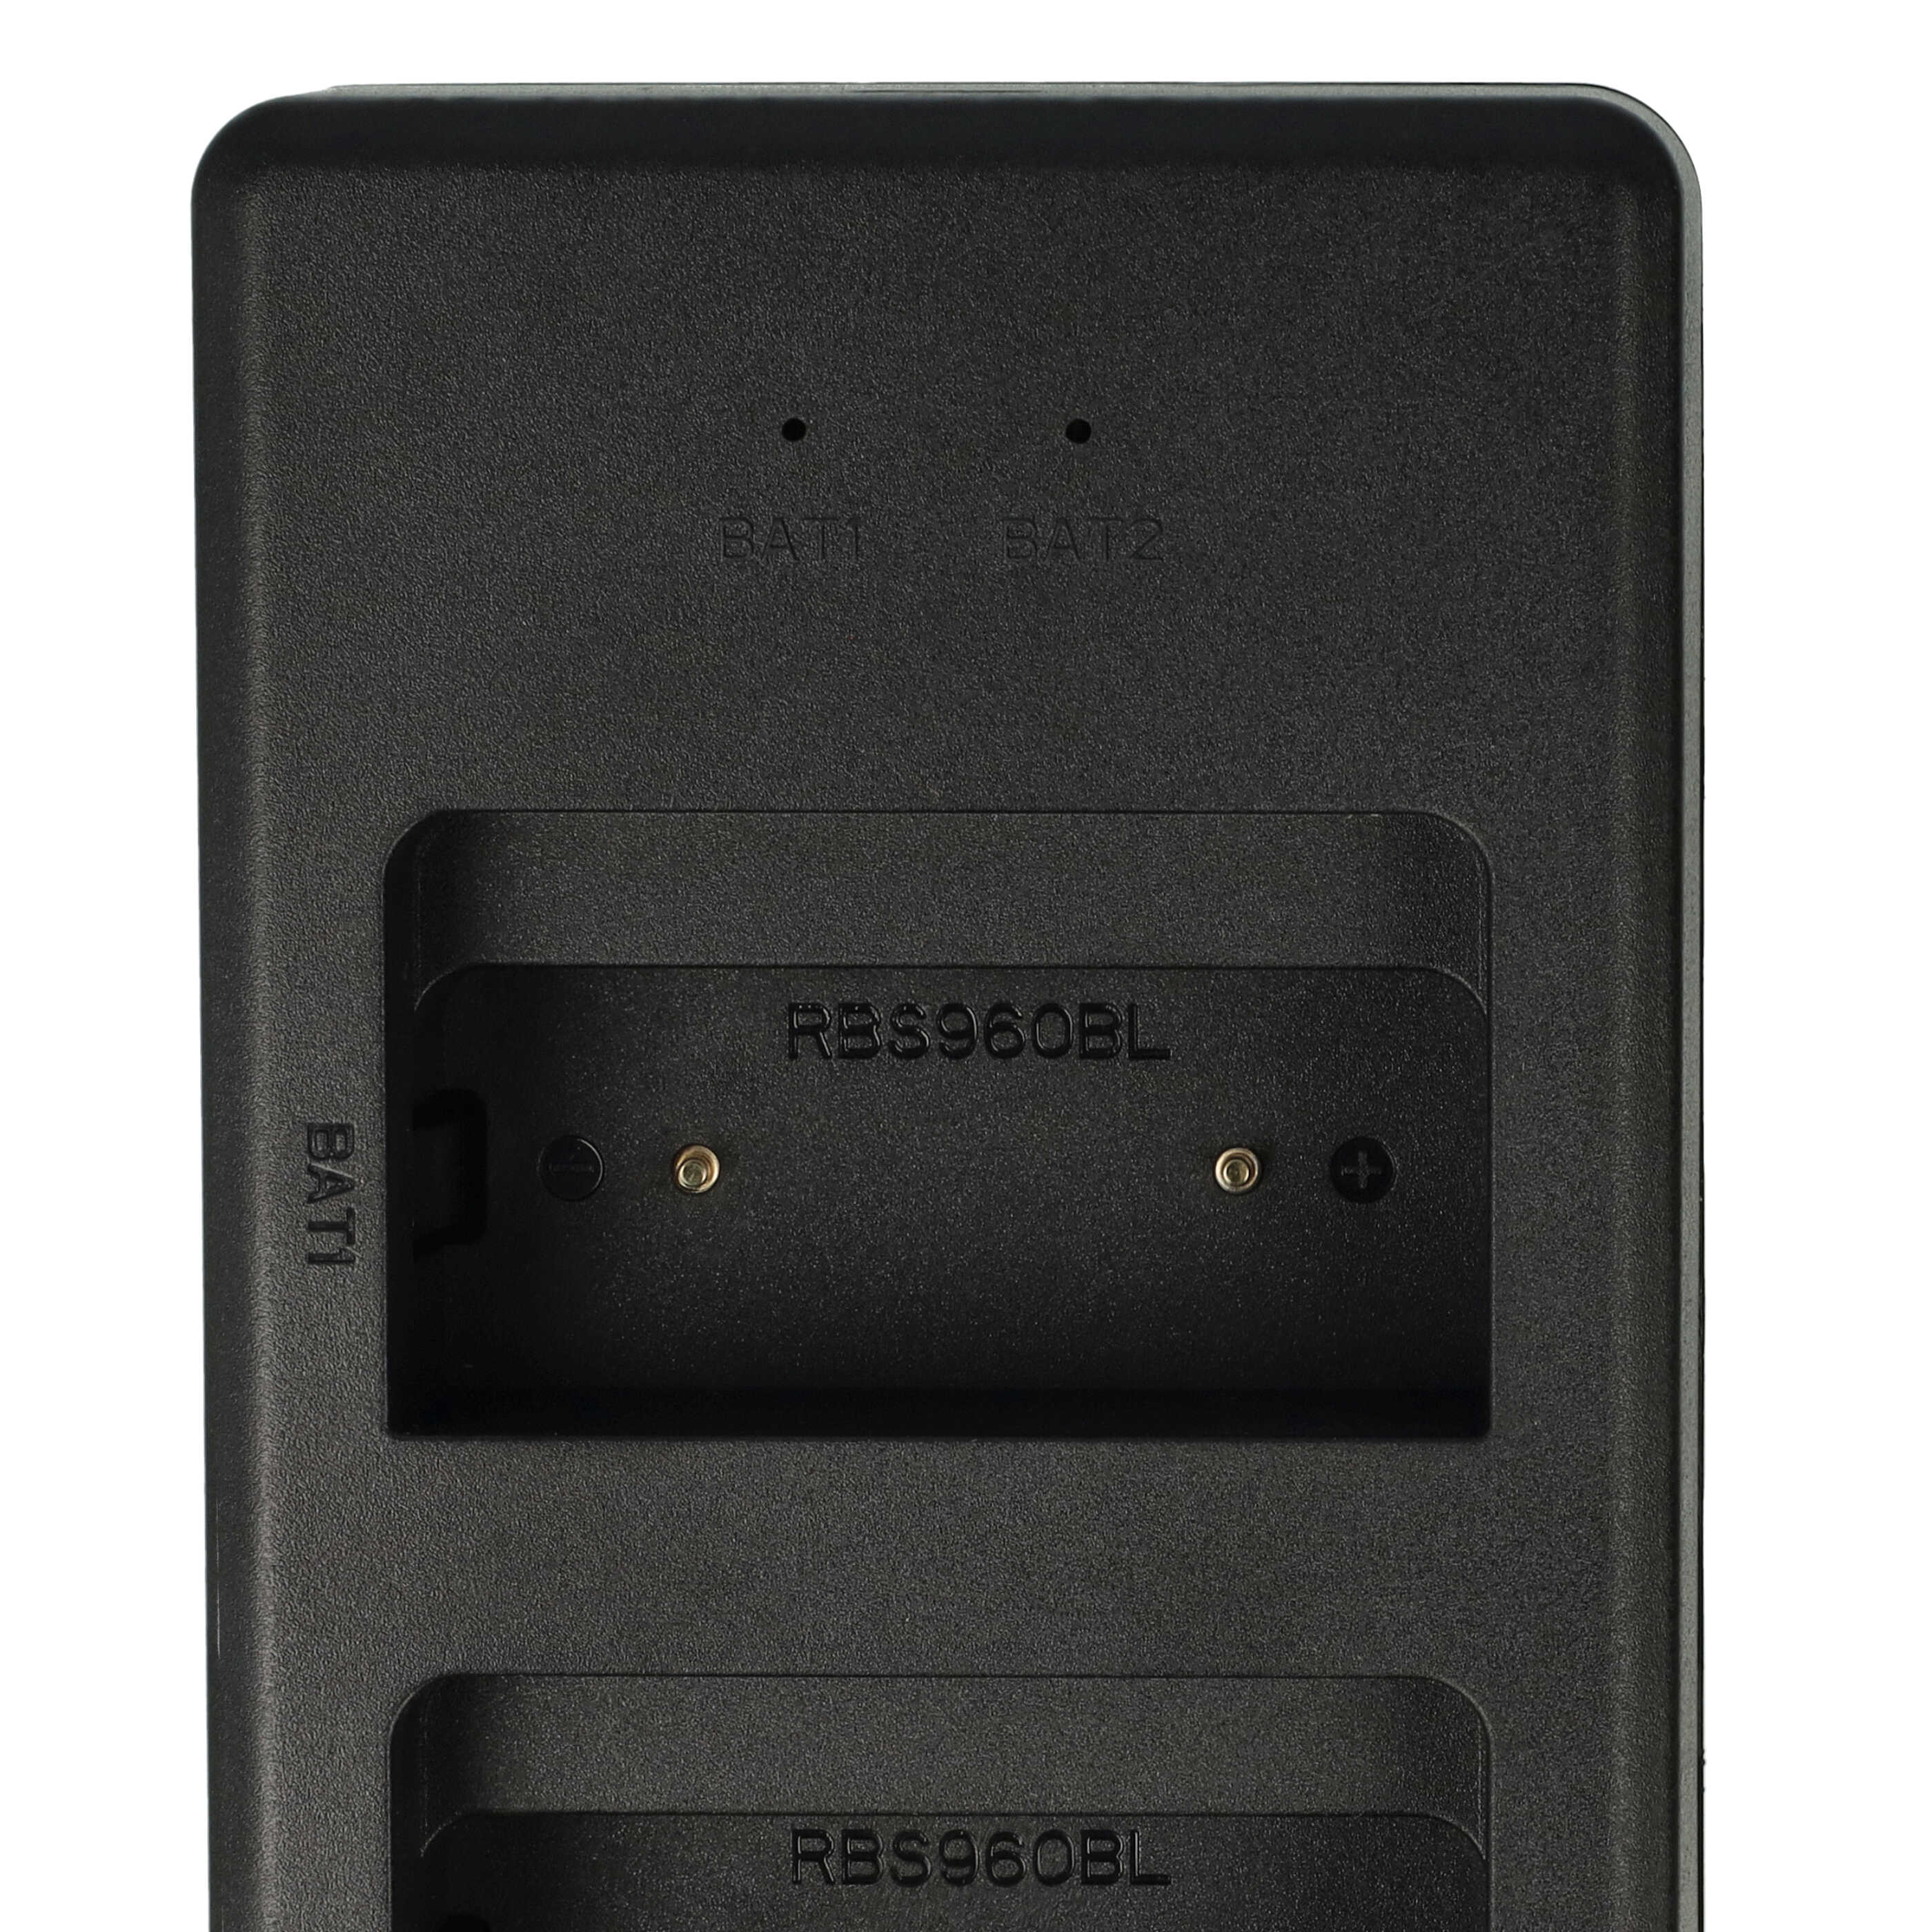 Dual-Ladegerät für Palfinger 590, 790 u.a.